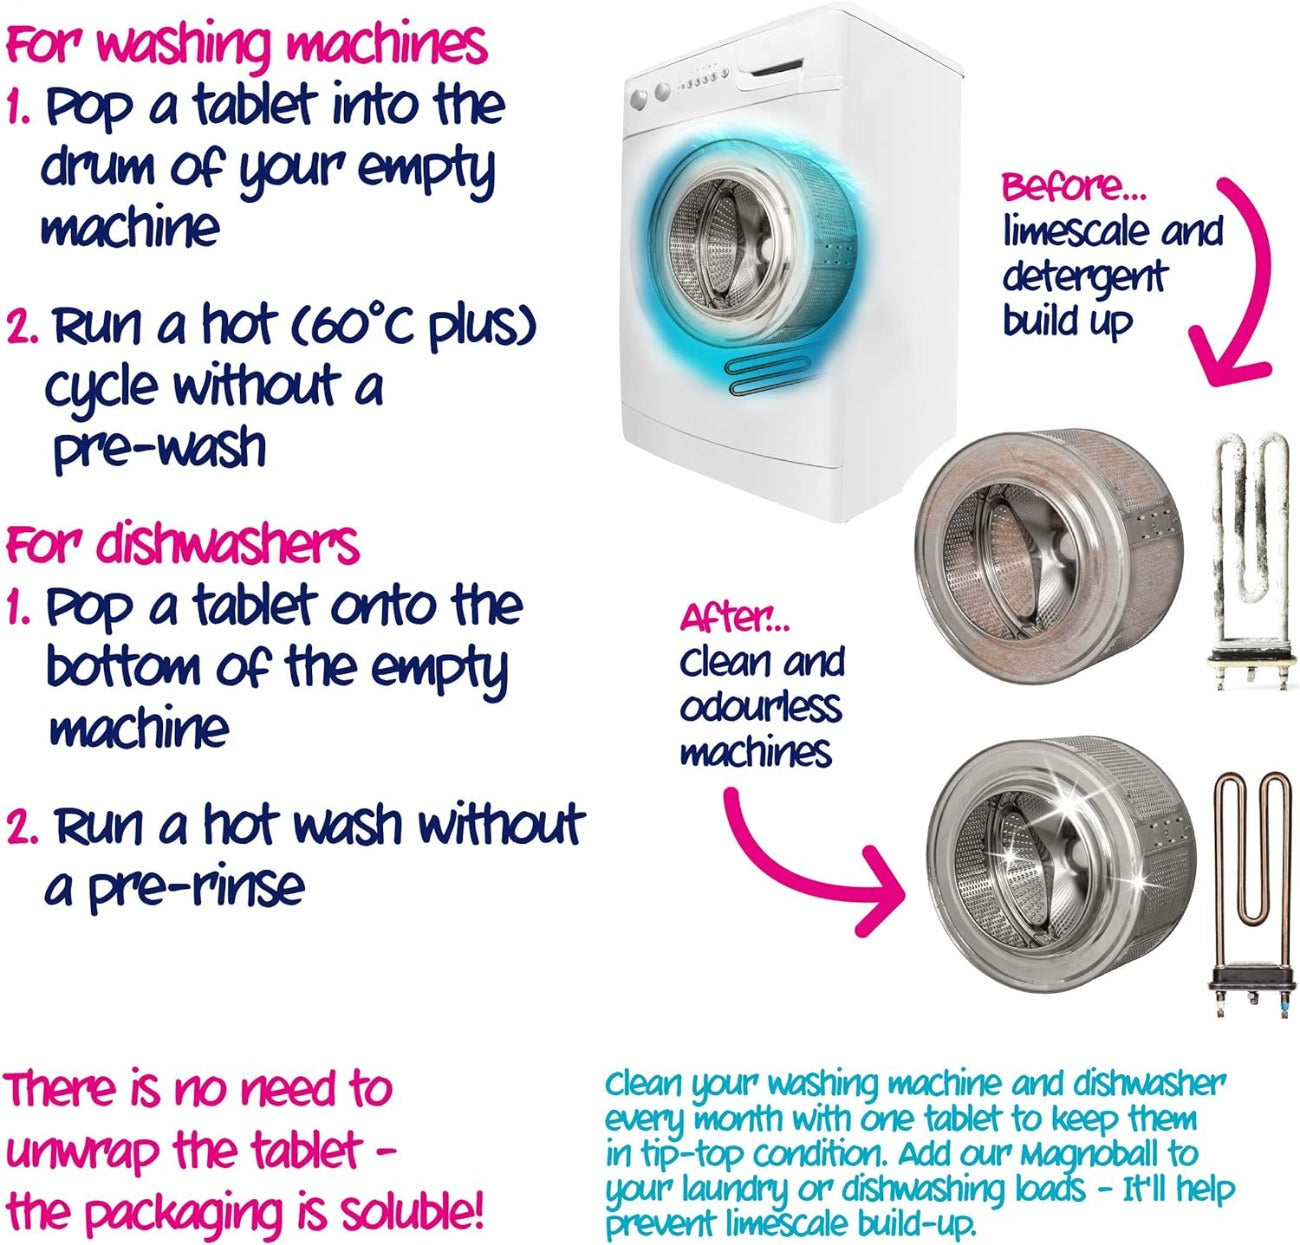 Washing Machine  Dishwasher Cleaner 135g